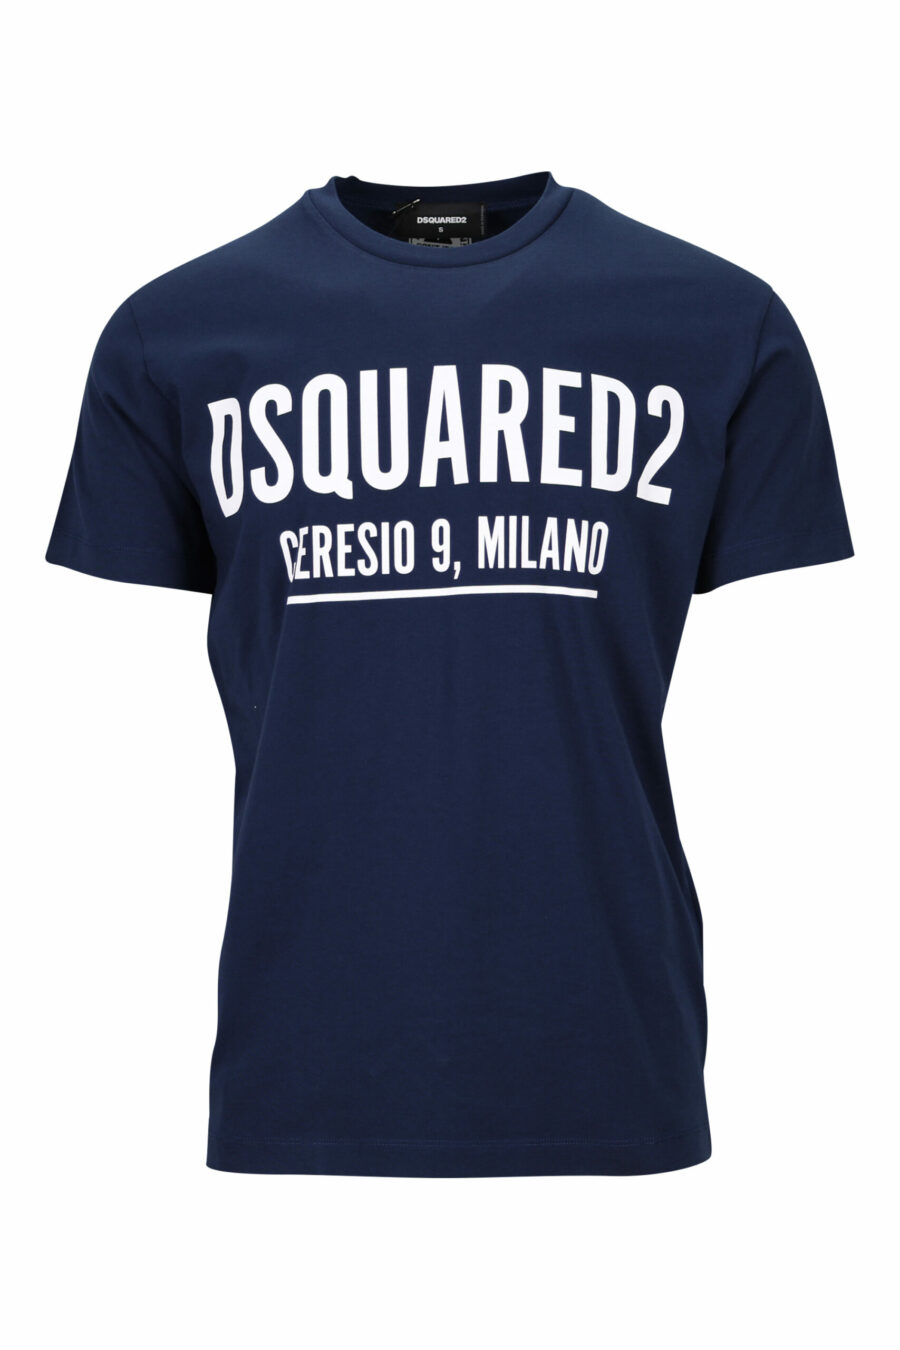 Dark blue T-shirt with maxilogo "ceresio 9, milano" - 8054148504915 scaled